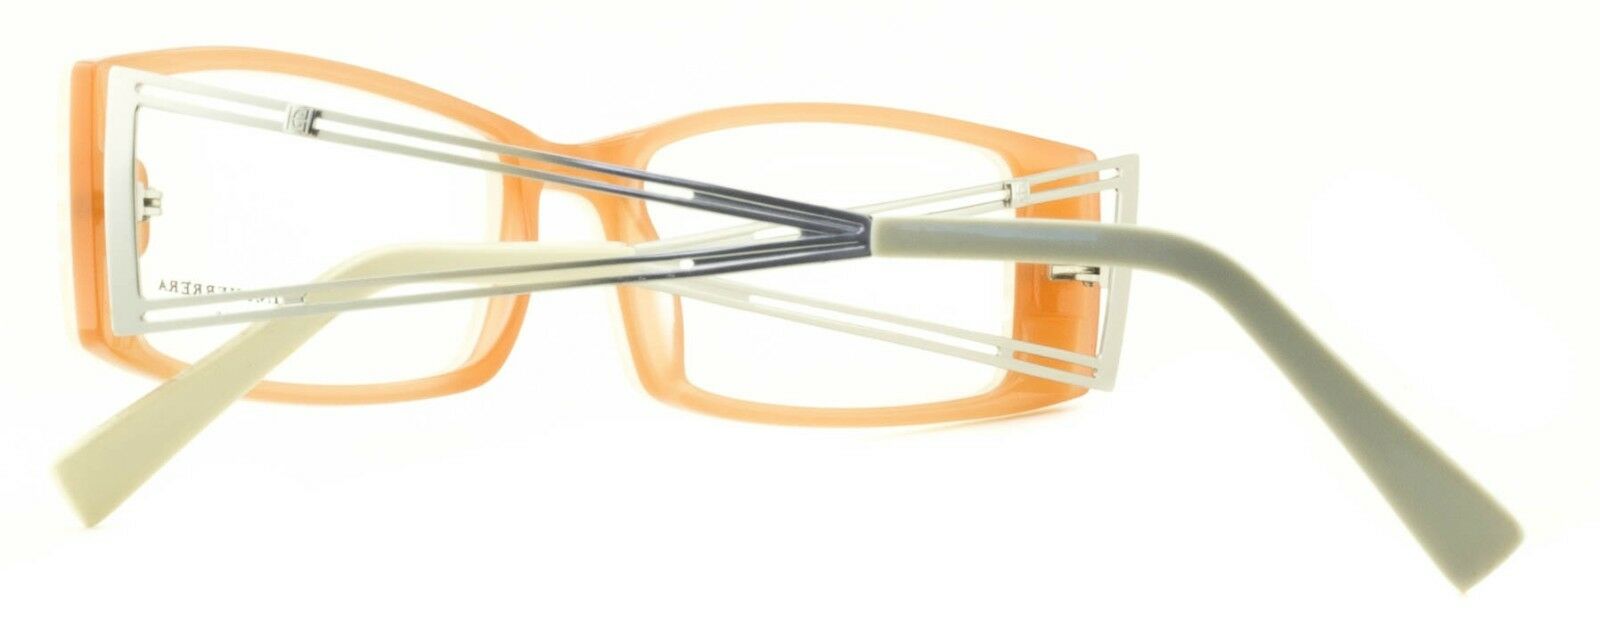 CAROLINA HERRERA CH-575 CA-1686 RX Optical FRAMES NEW Glasses Eyewear - BNIB